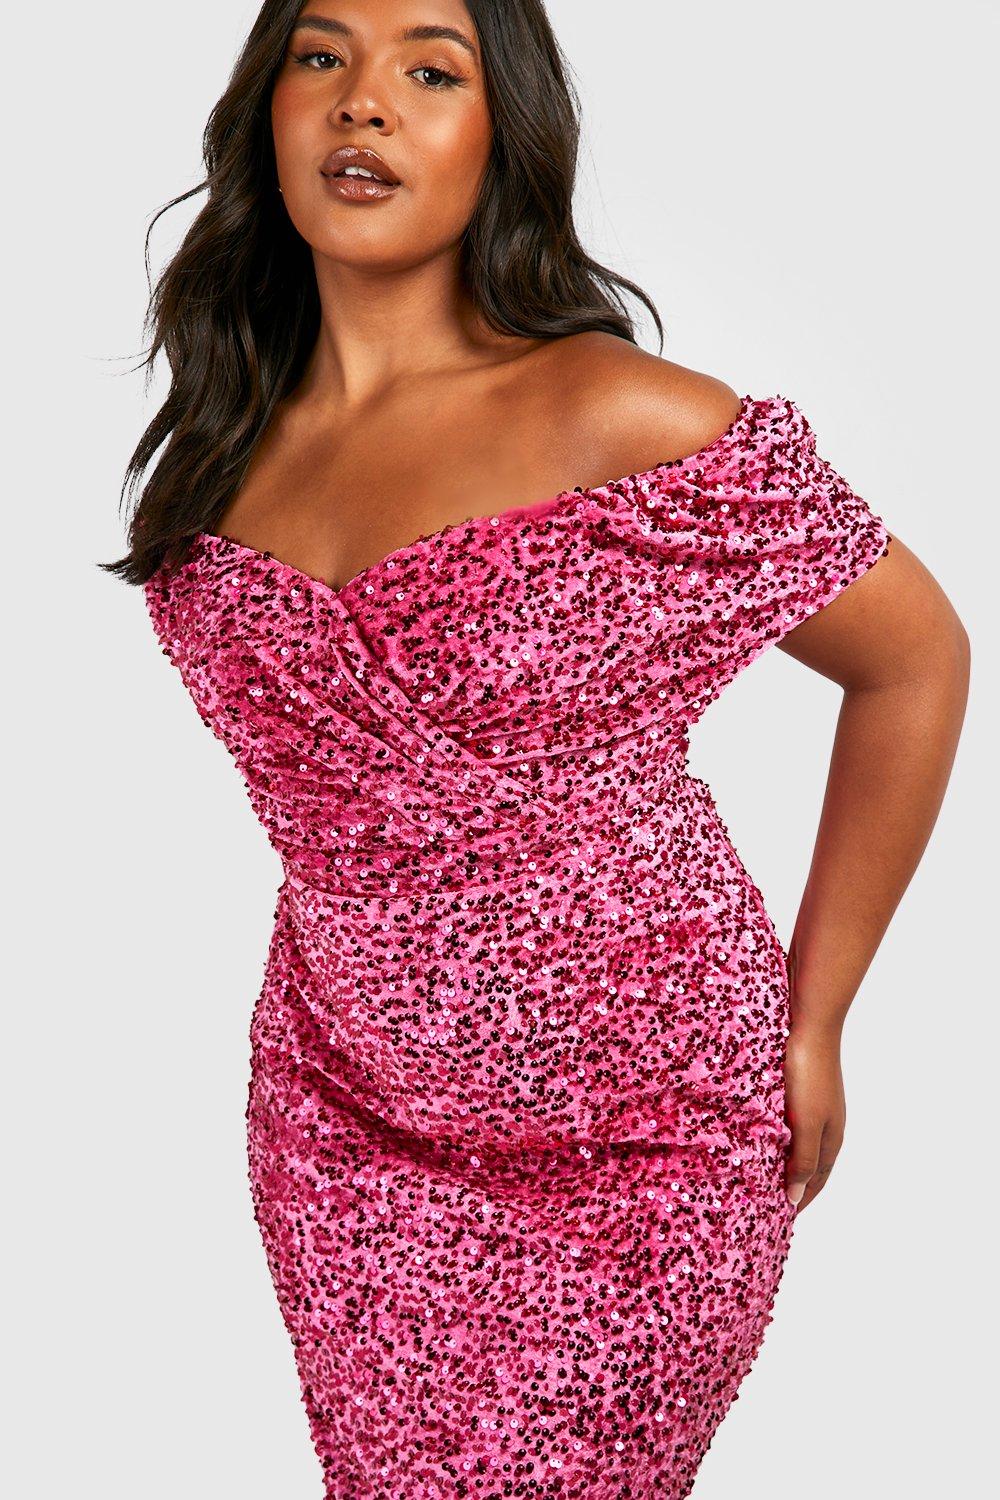 sequin pink dress